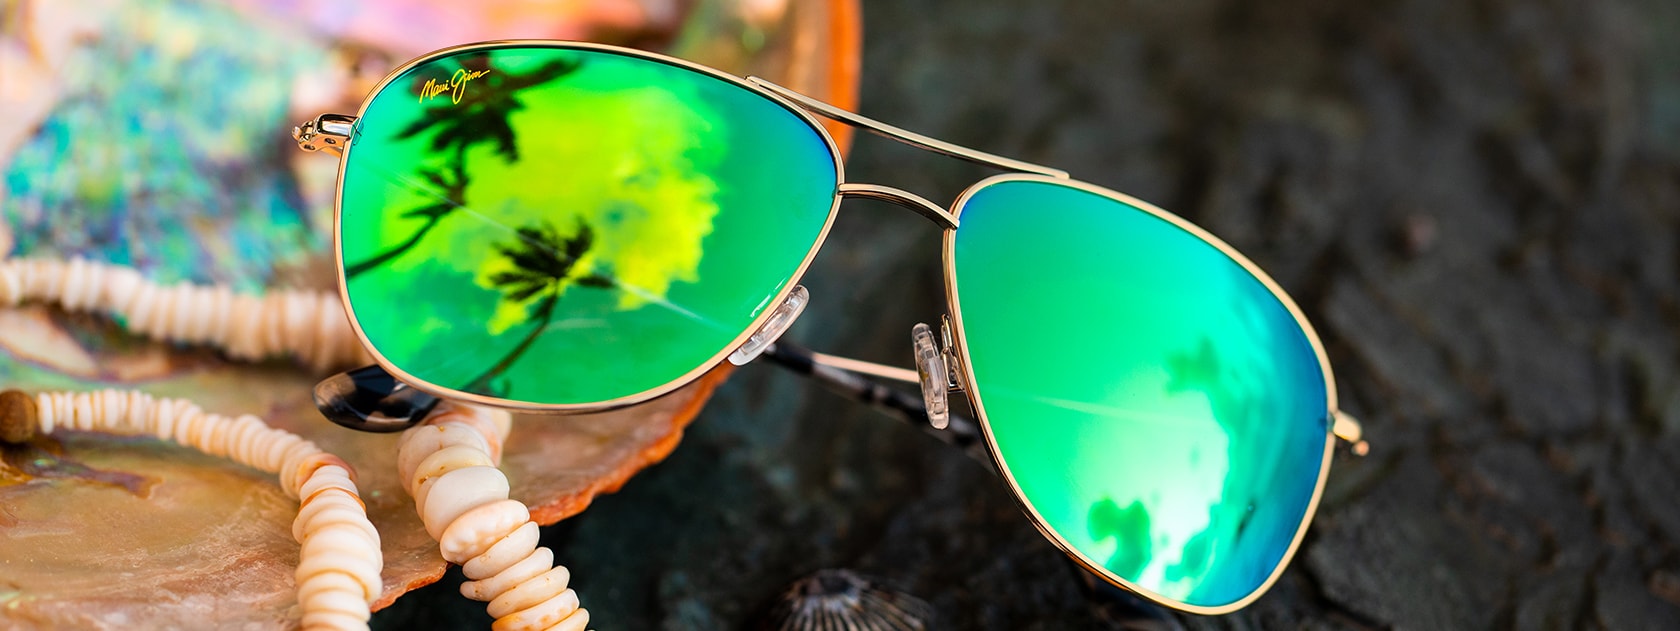 Buy Maui Jim Sunglasses Online at Best Price